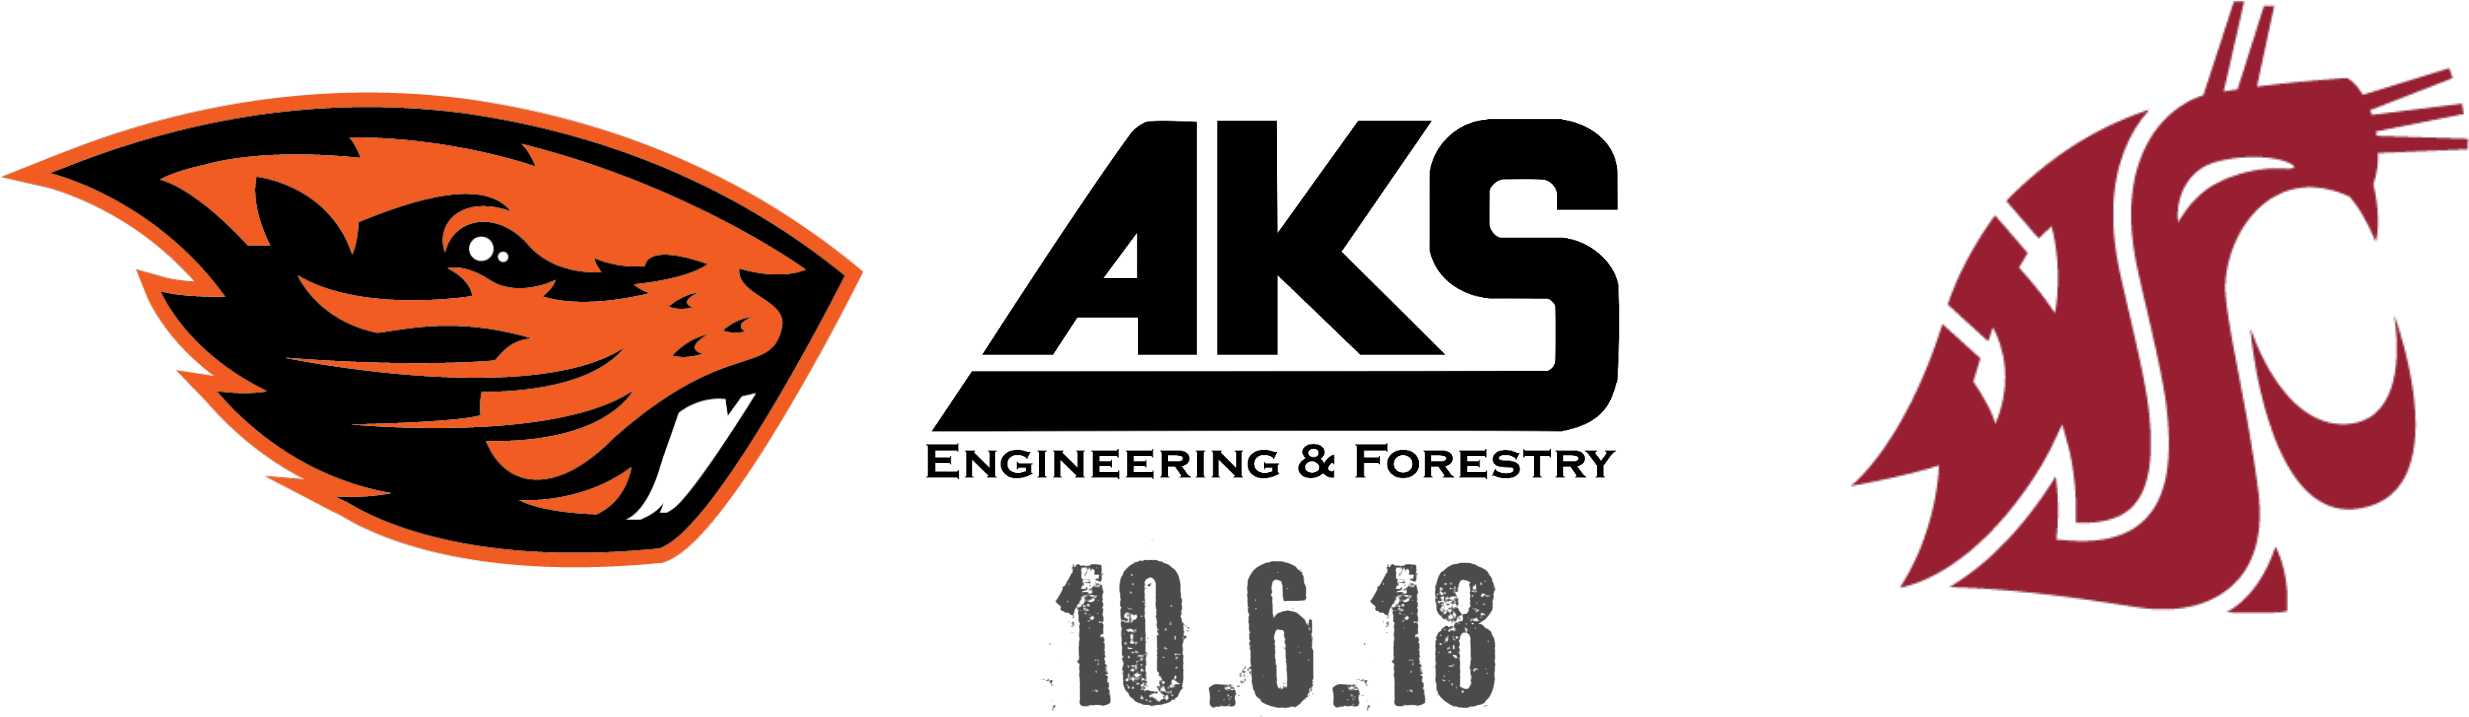 Event Image - Oregon State Beavers Logo Decal - 7" X 3.5" (2559x853)